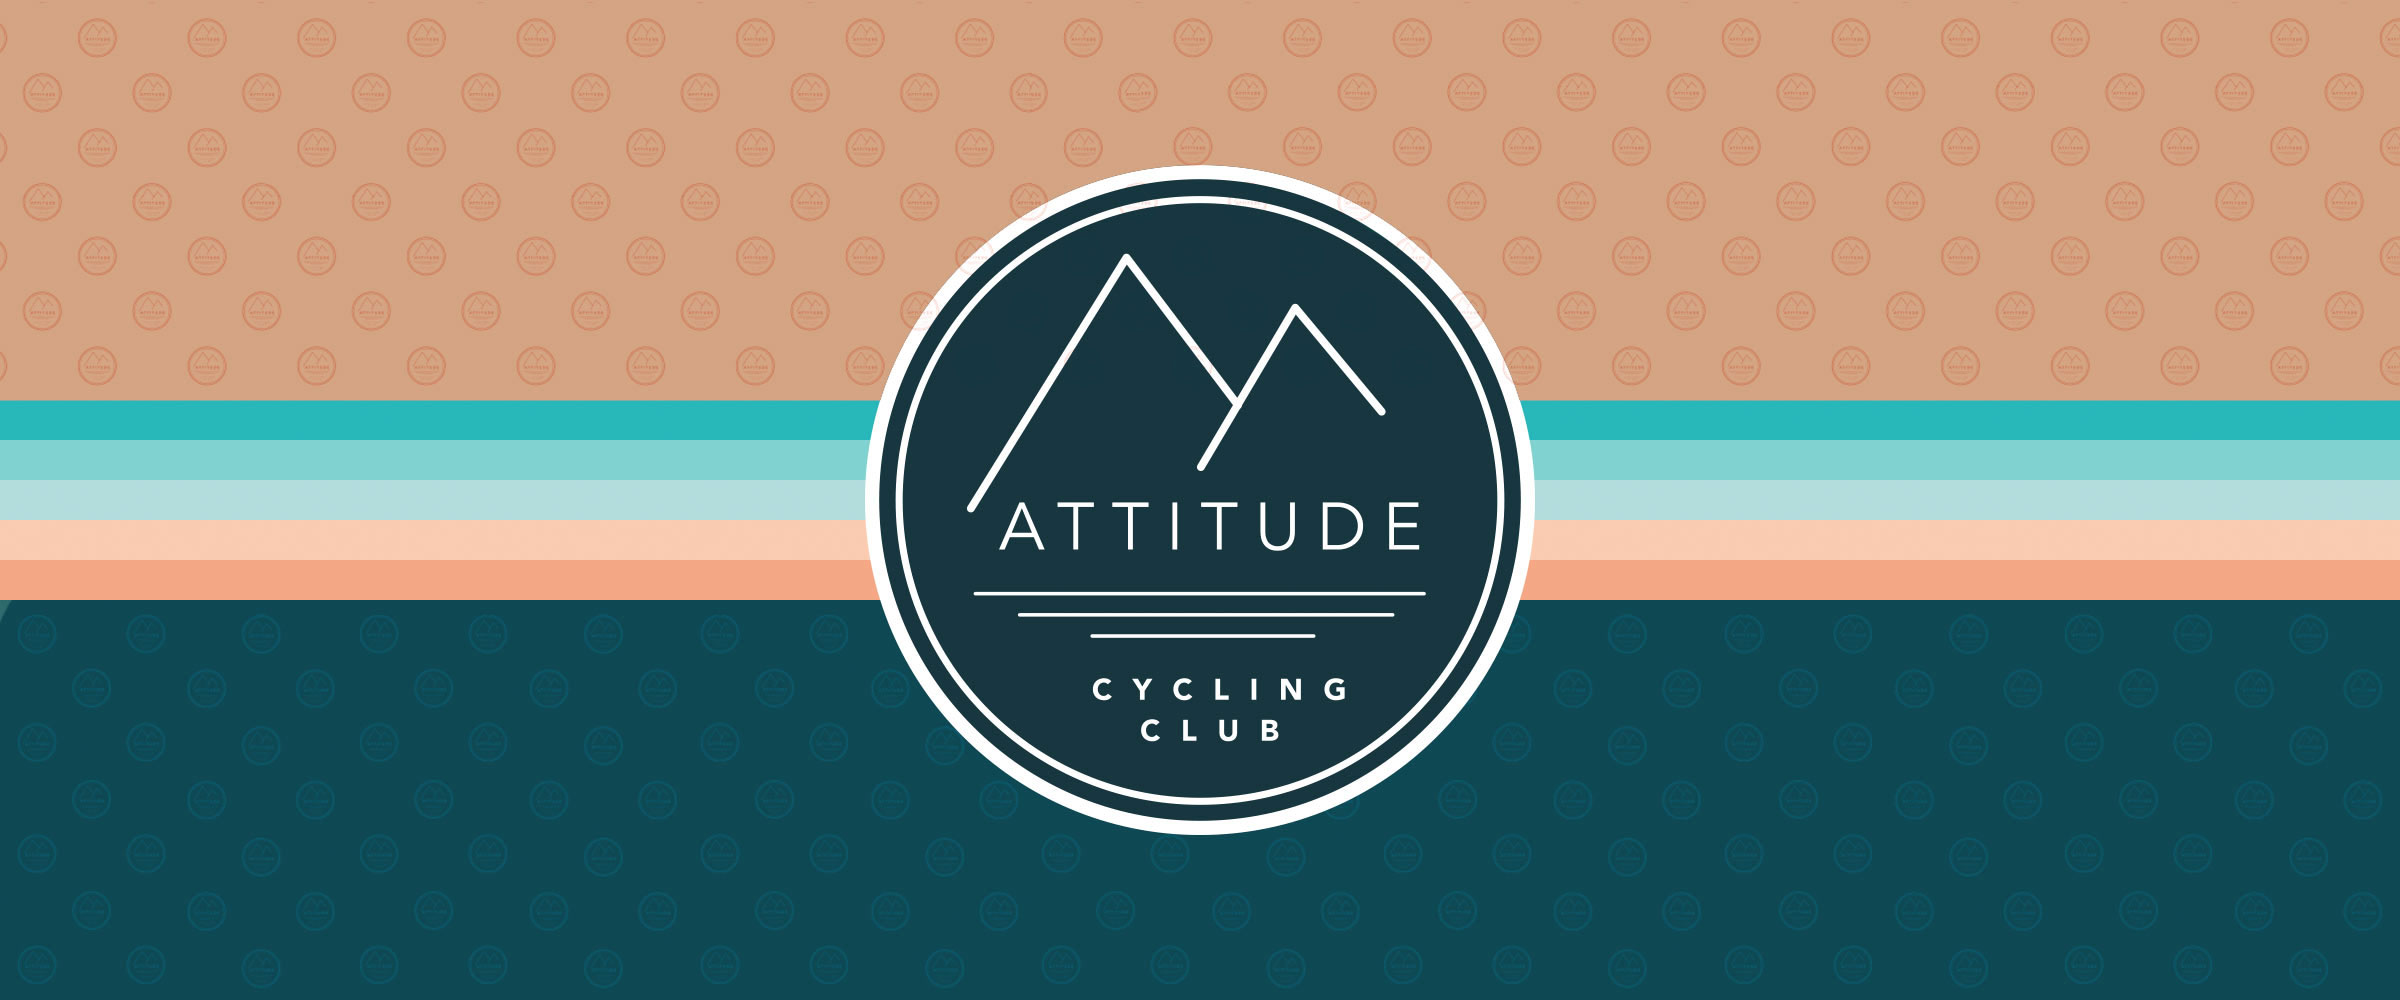 attitude-cycling-club-g4